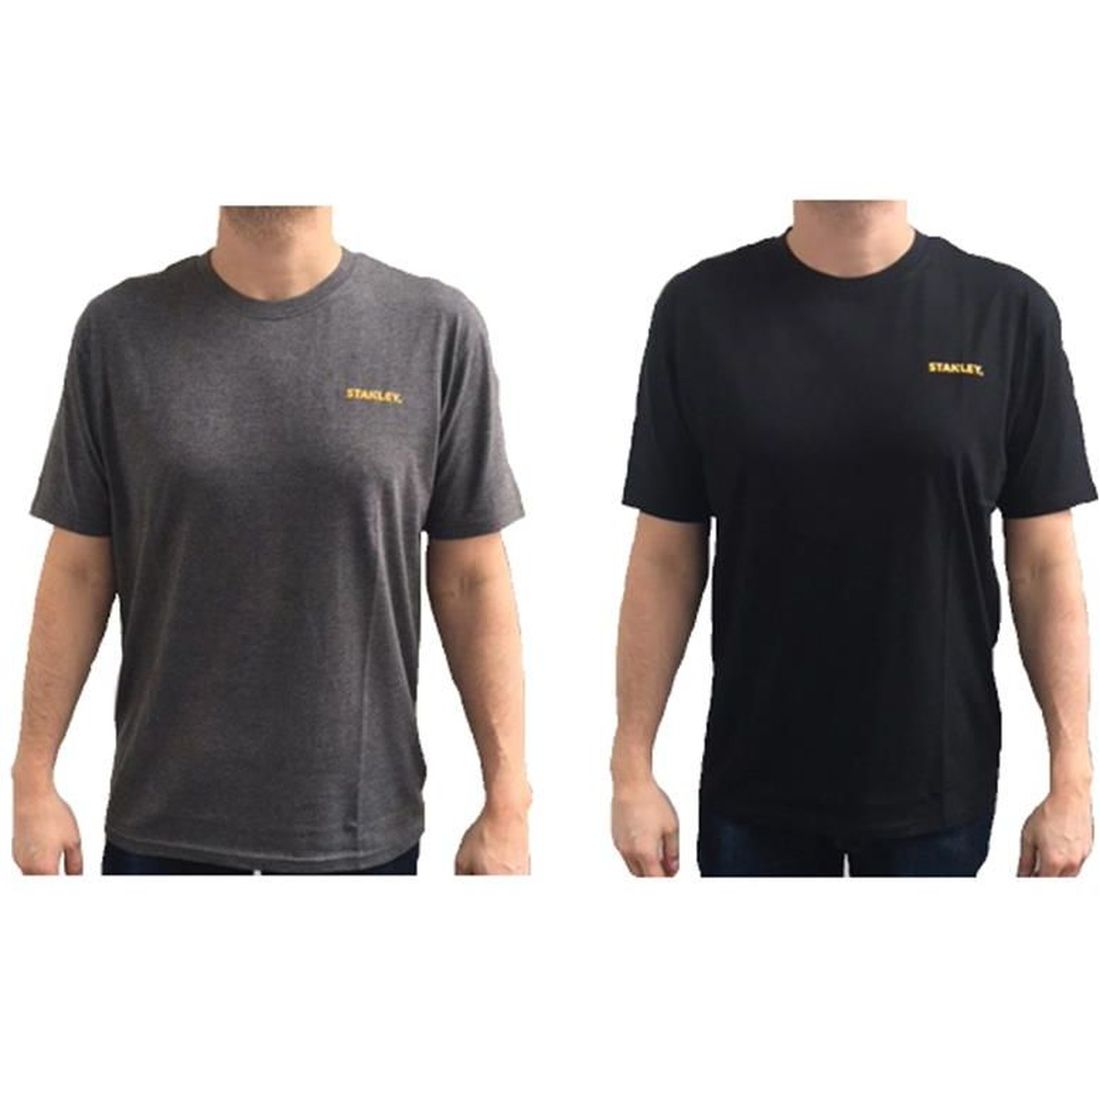 STANLEY T-Shirt Twin Pack Grey & Black - L